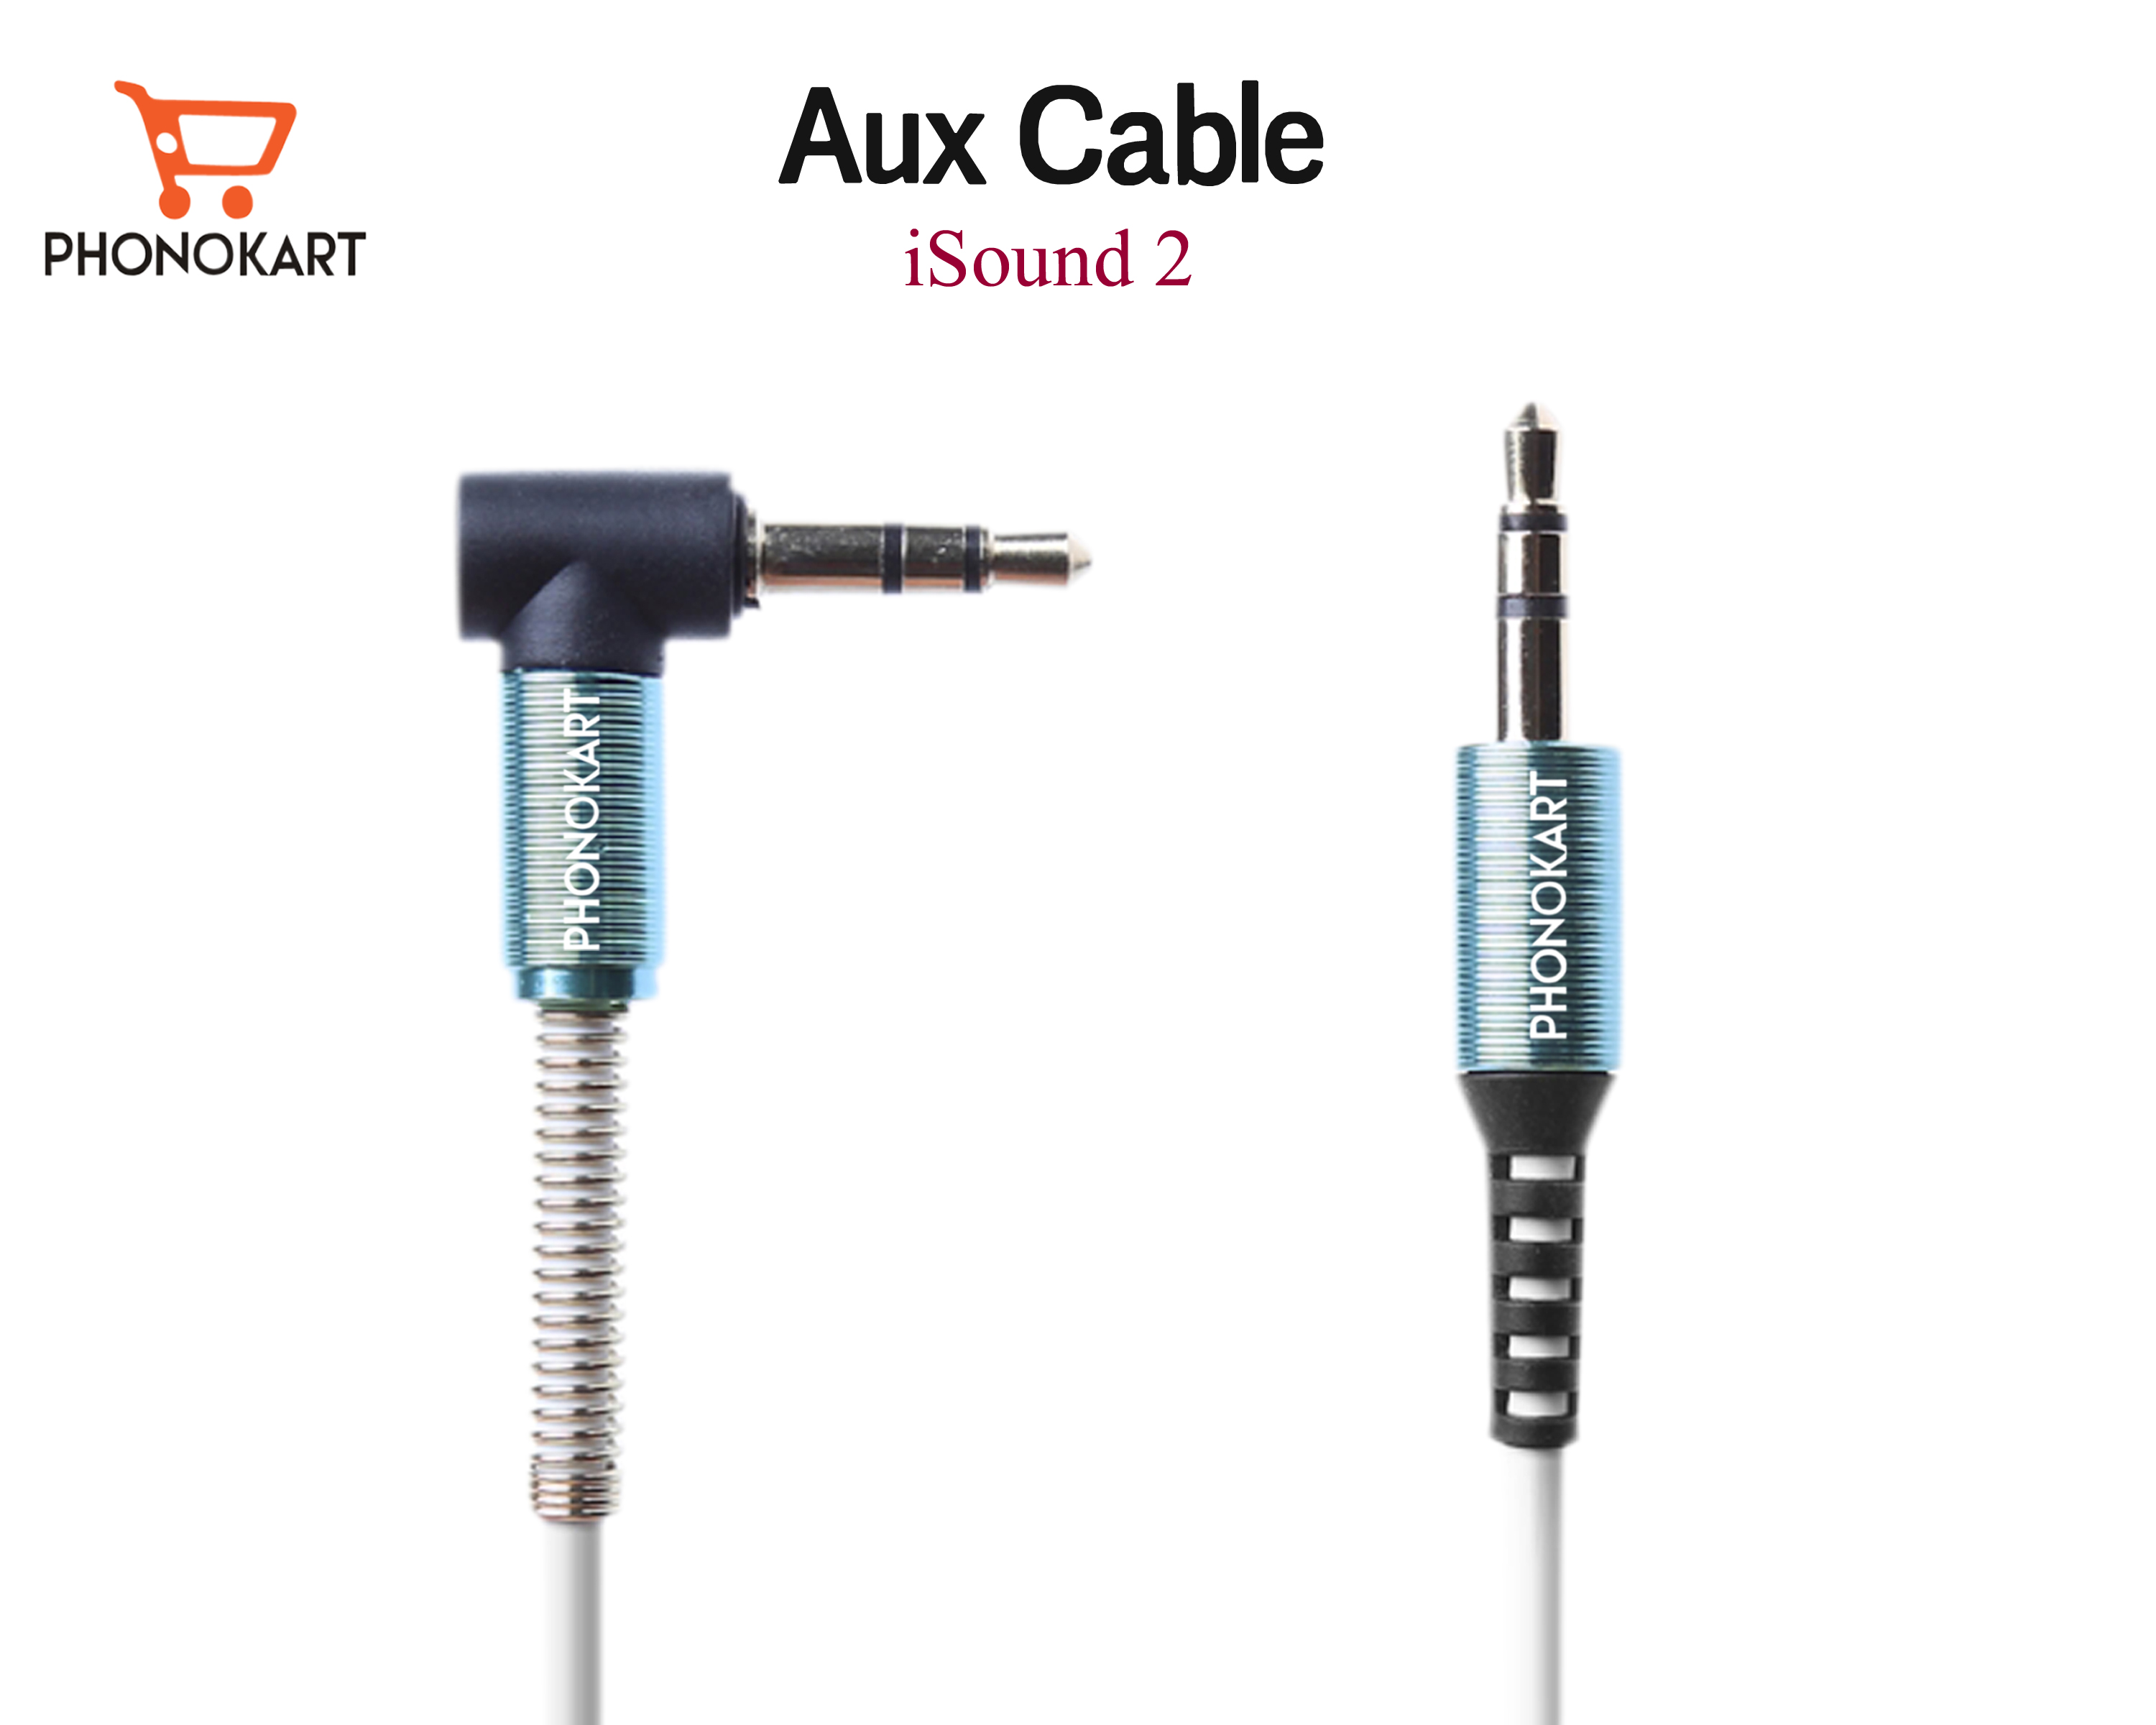 Aux audio cable Cable ISound 2 (1.5M)